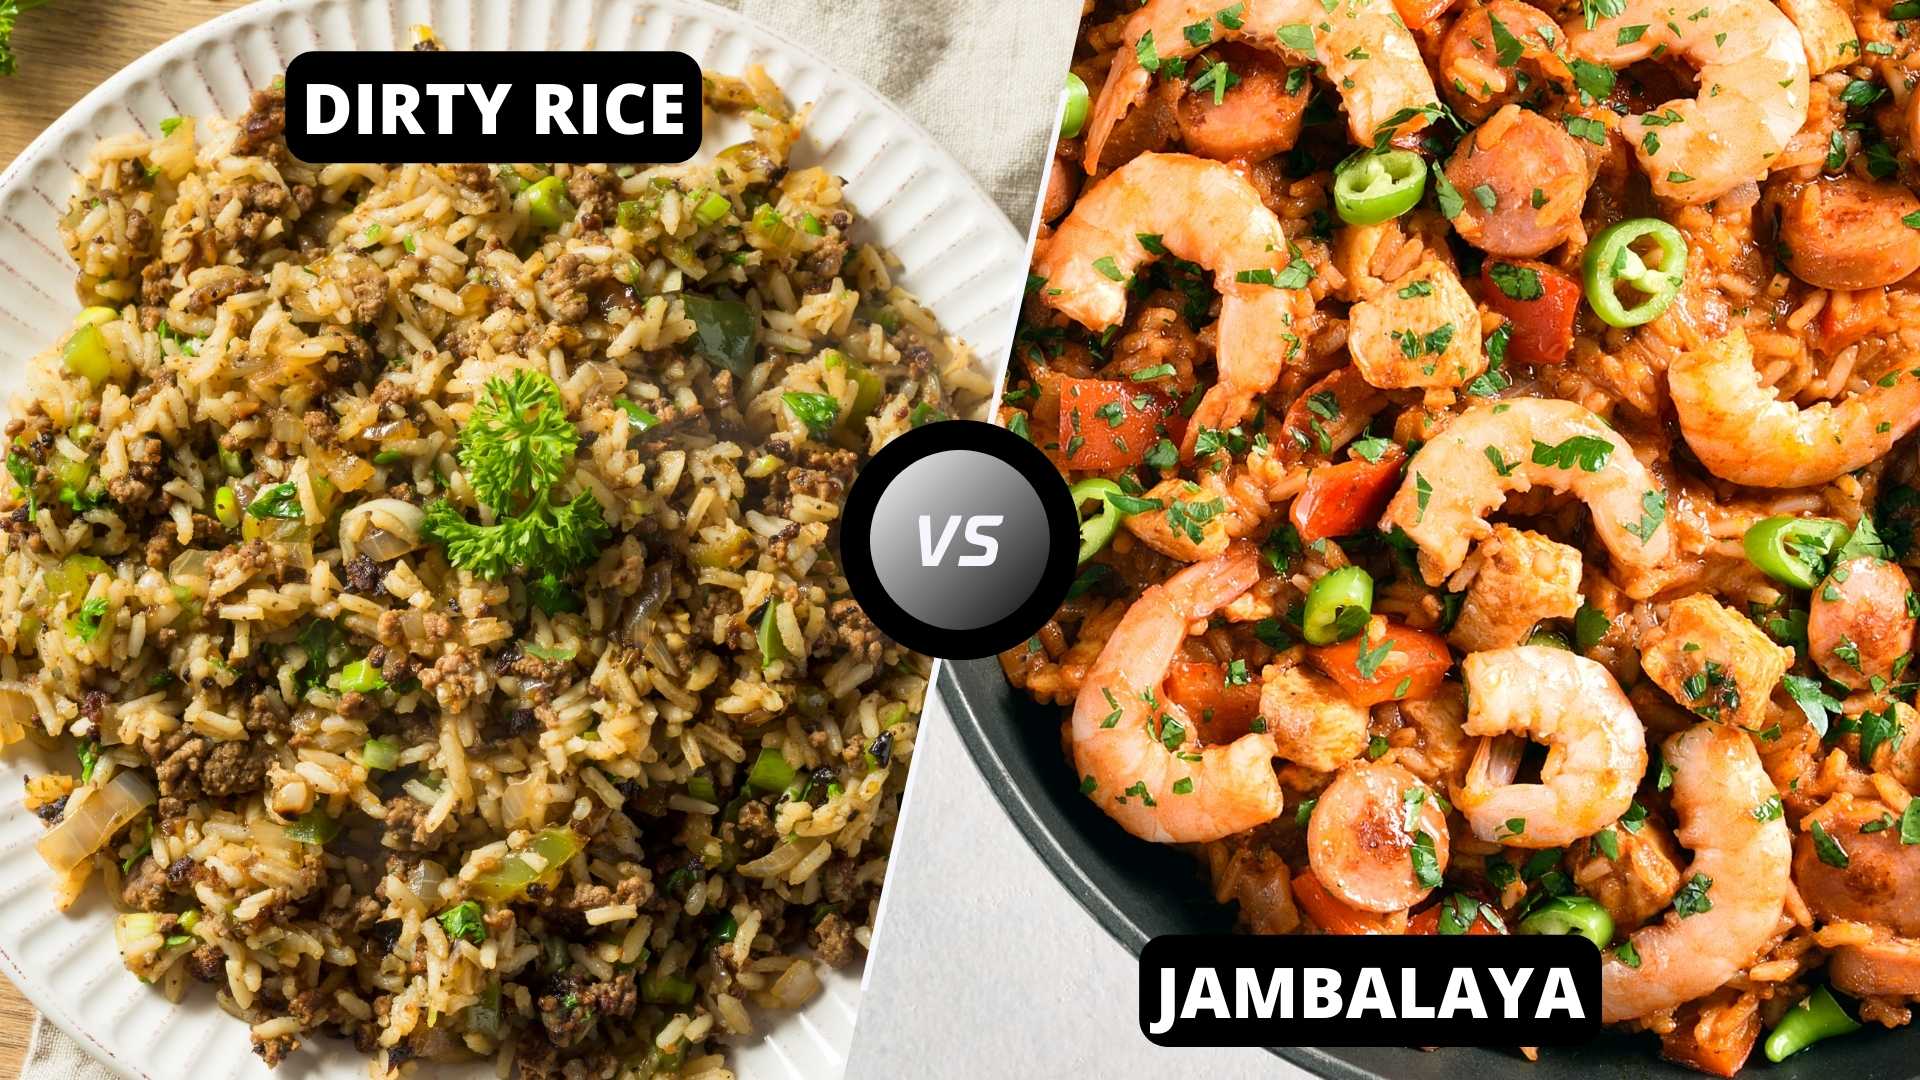 Dirty Rice vs Jambalaya: A Battle of Southern Creole Cuisine